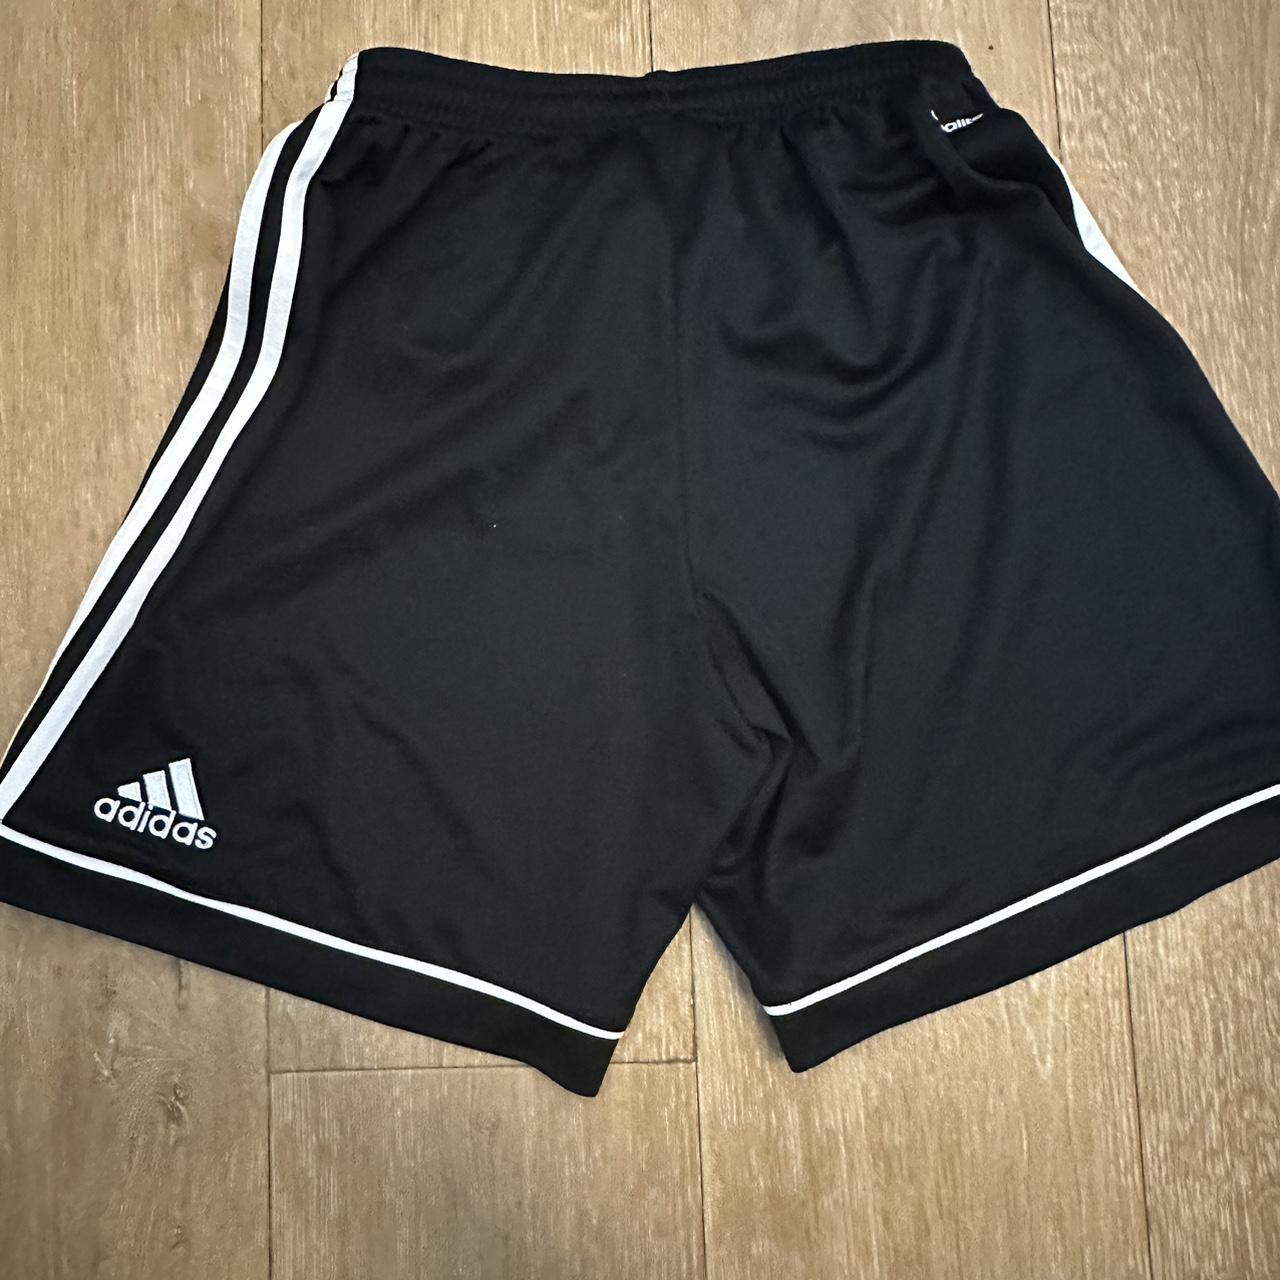 Adidas black climate gym shorts. Very good condition. - Depop